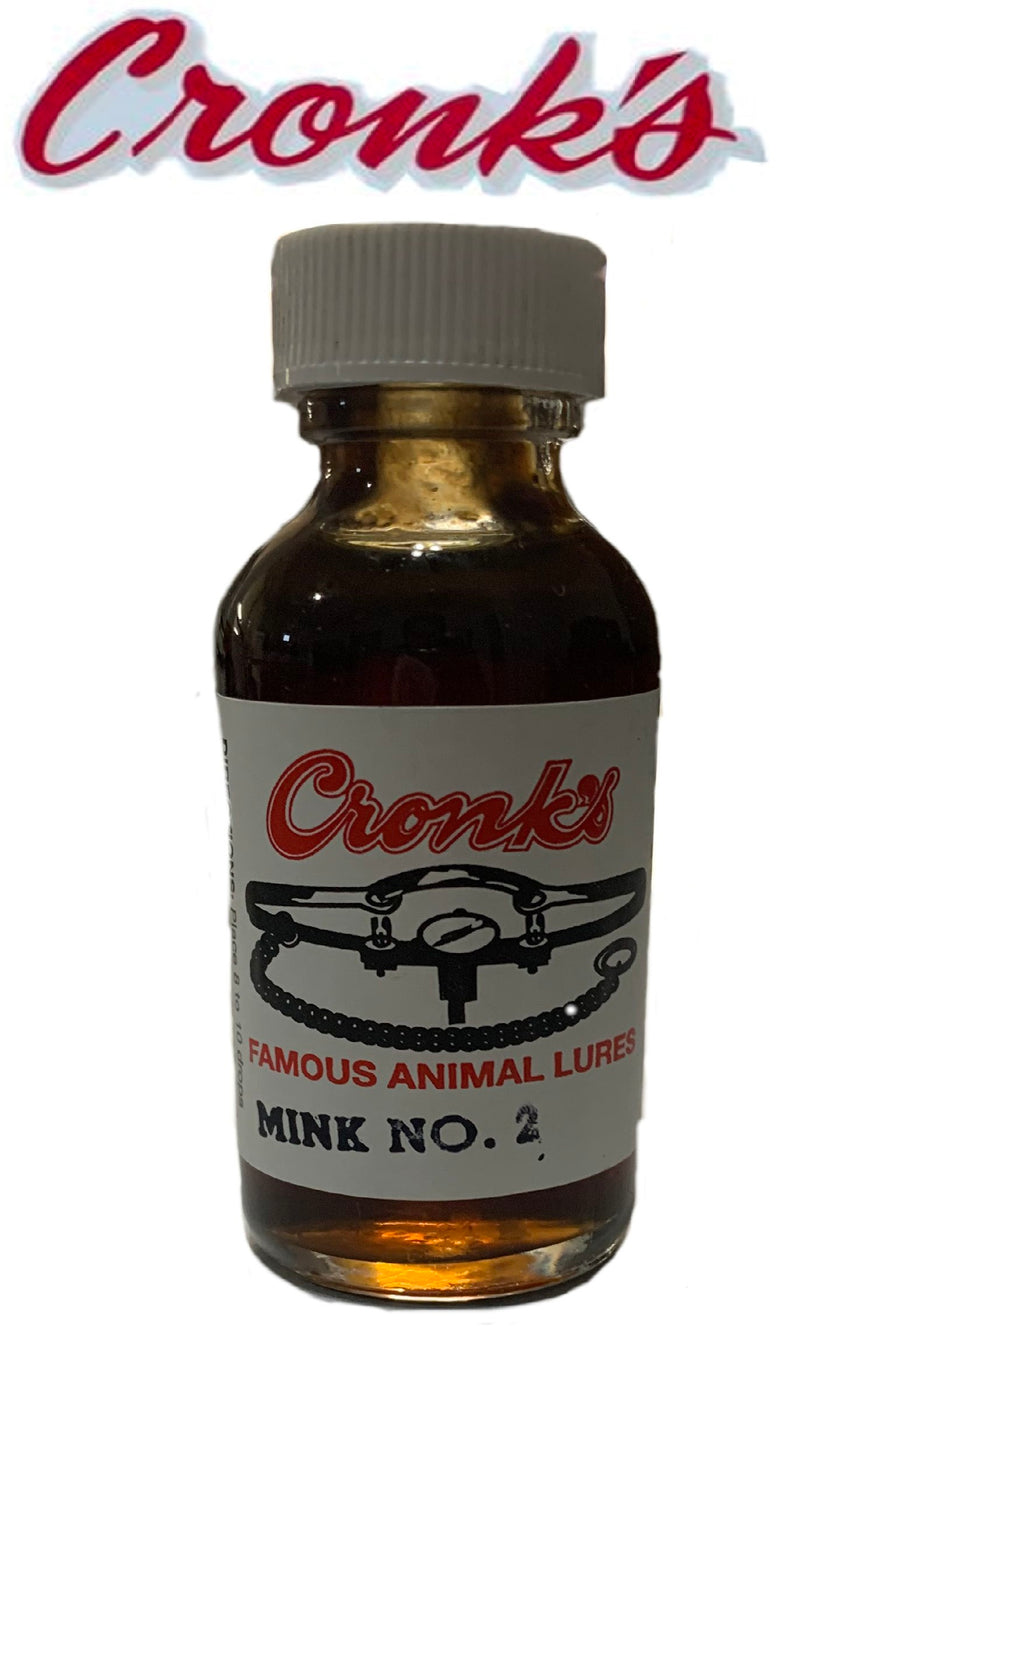 Cronk's Mink No. 2